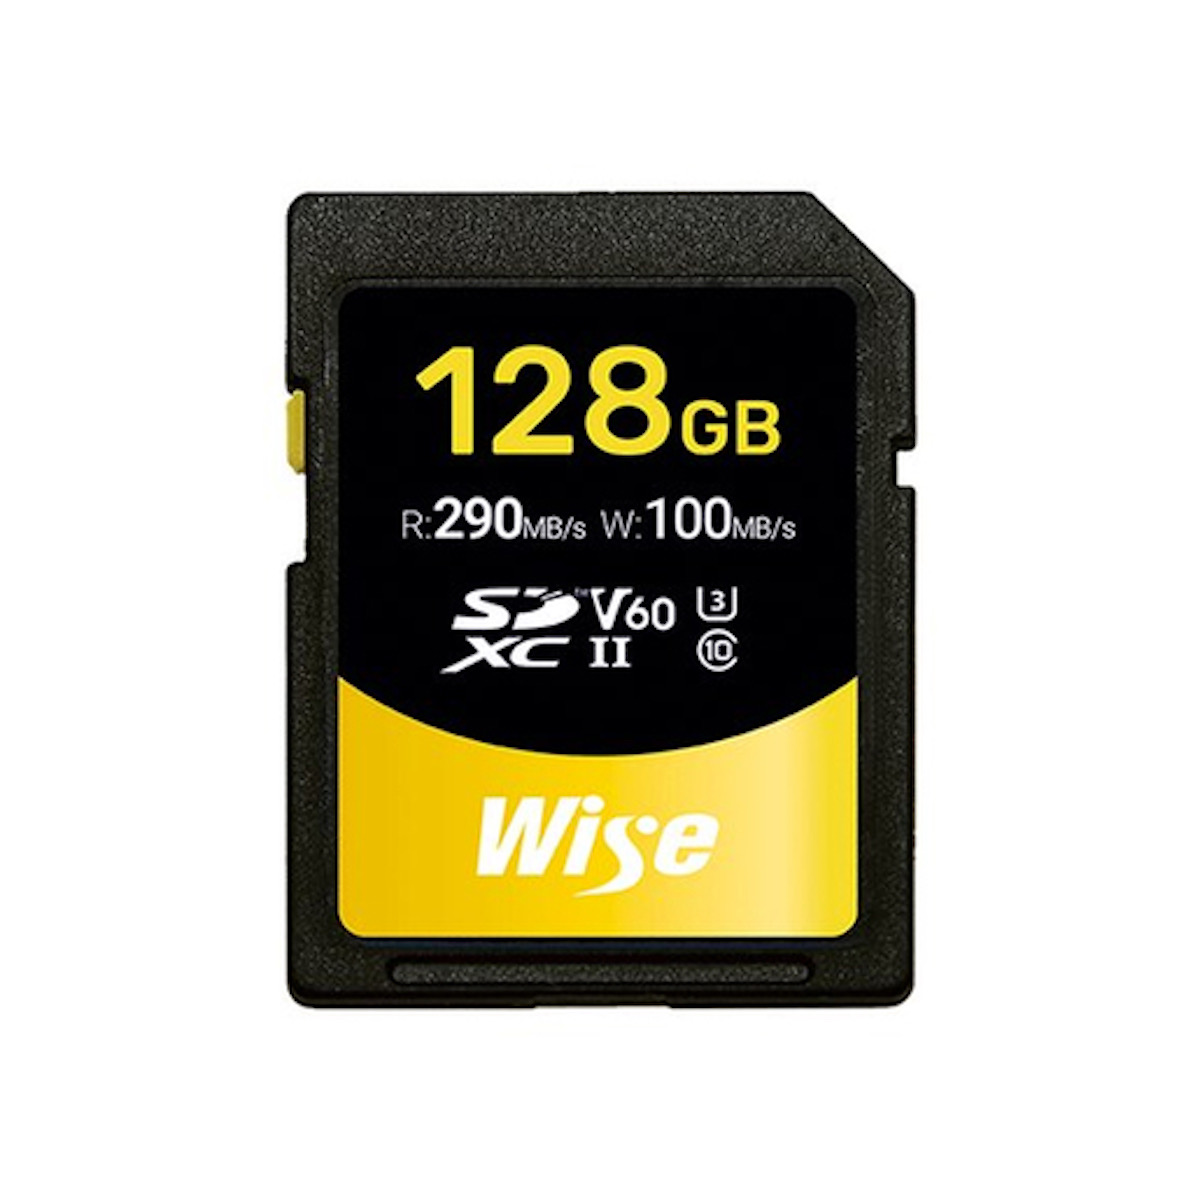 Wise 128 GB SDXC UHS-II V60